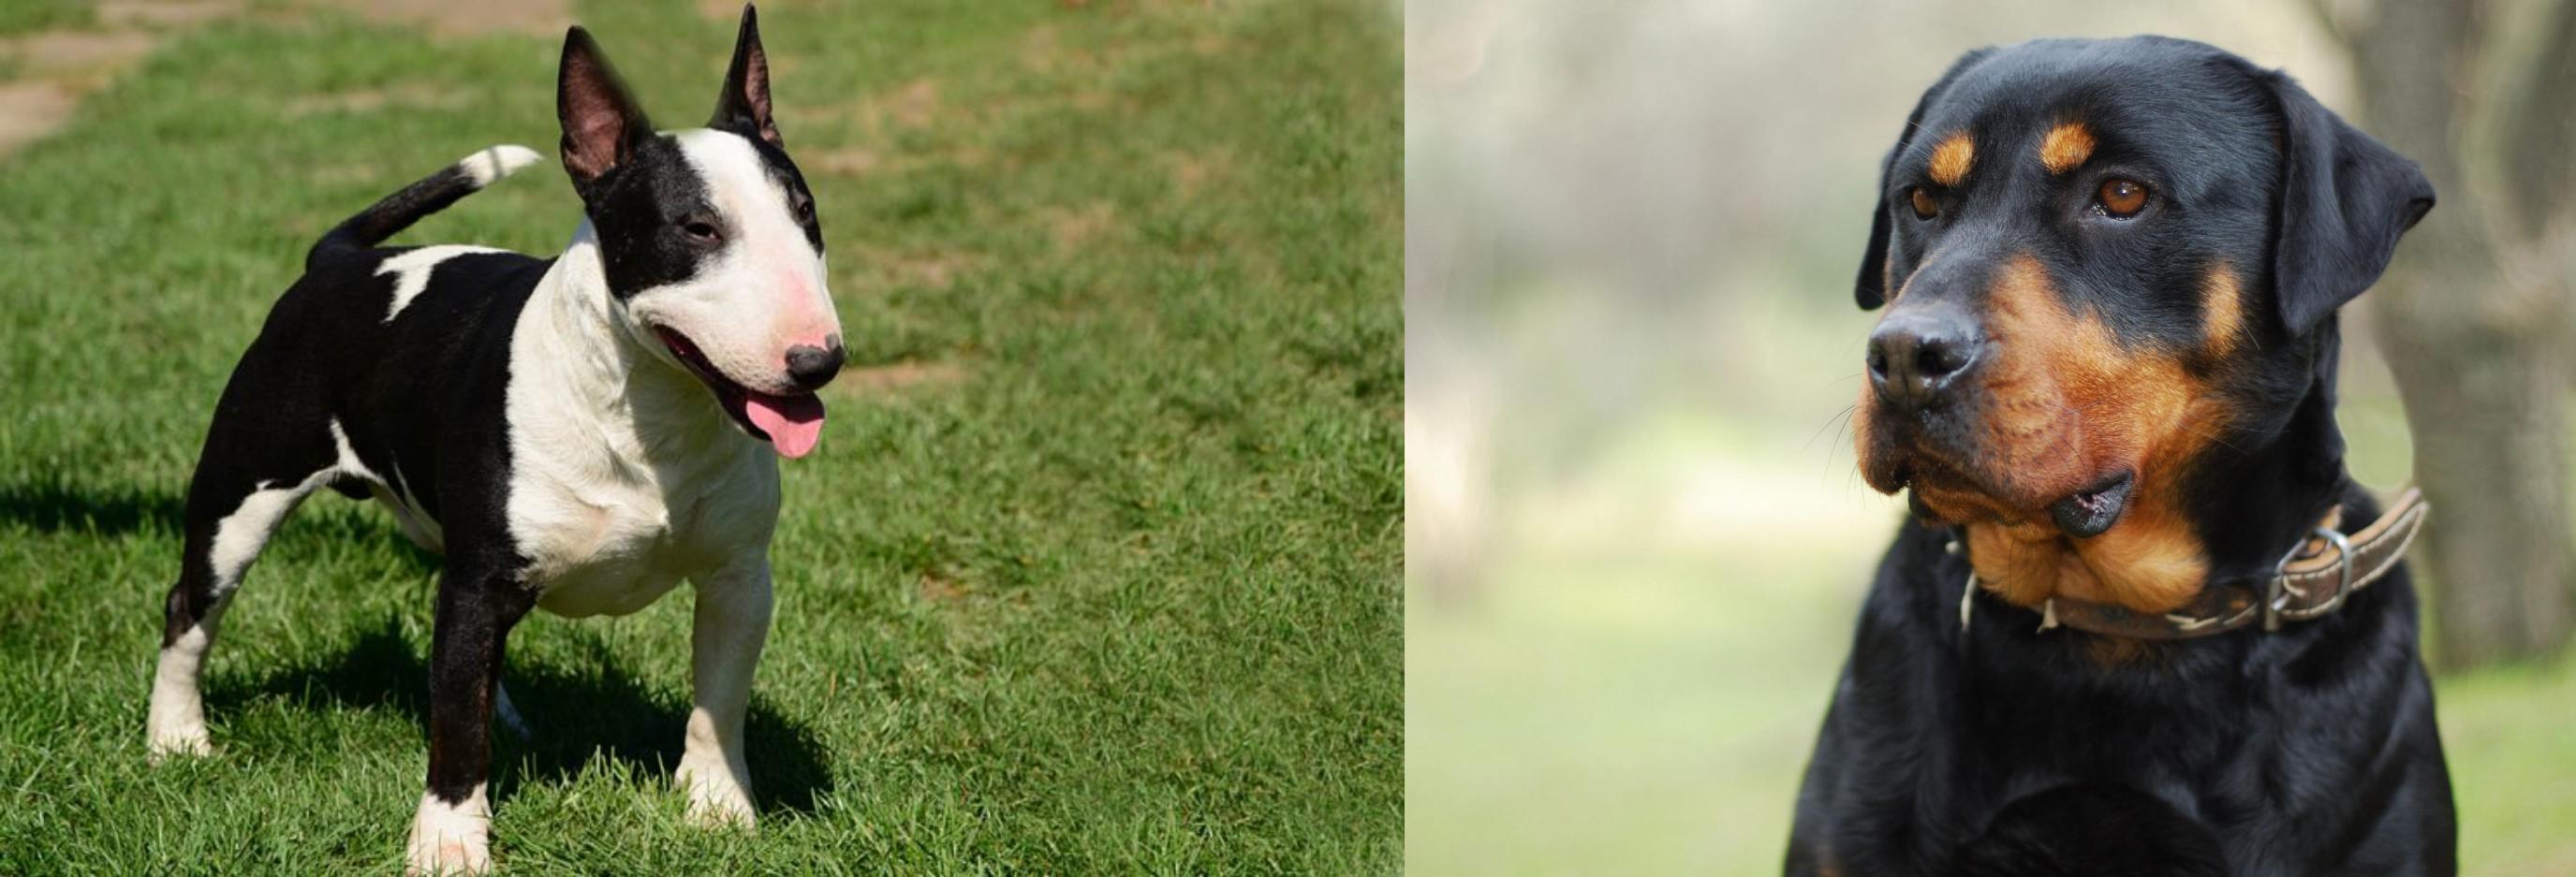 Bull Terrier Miniature vs Rottweiler Breed Comparison